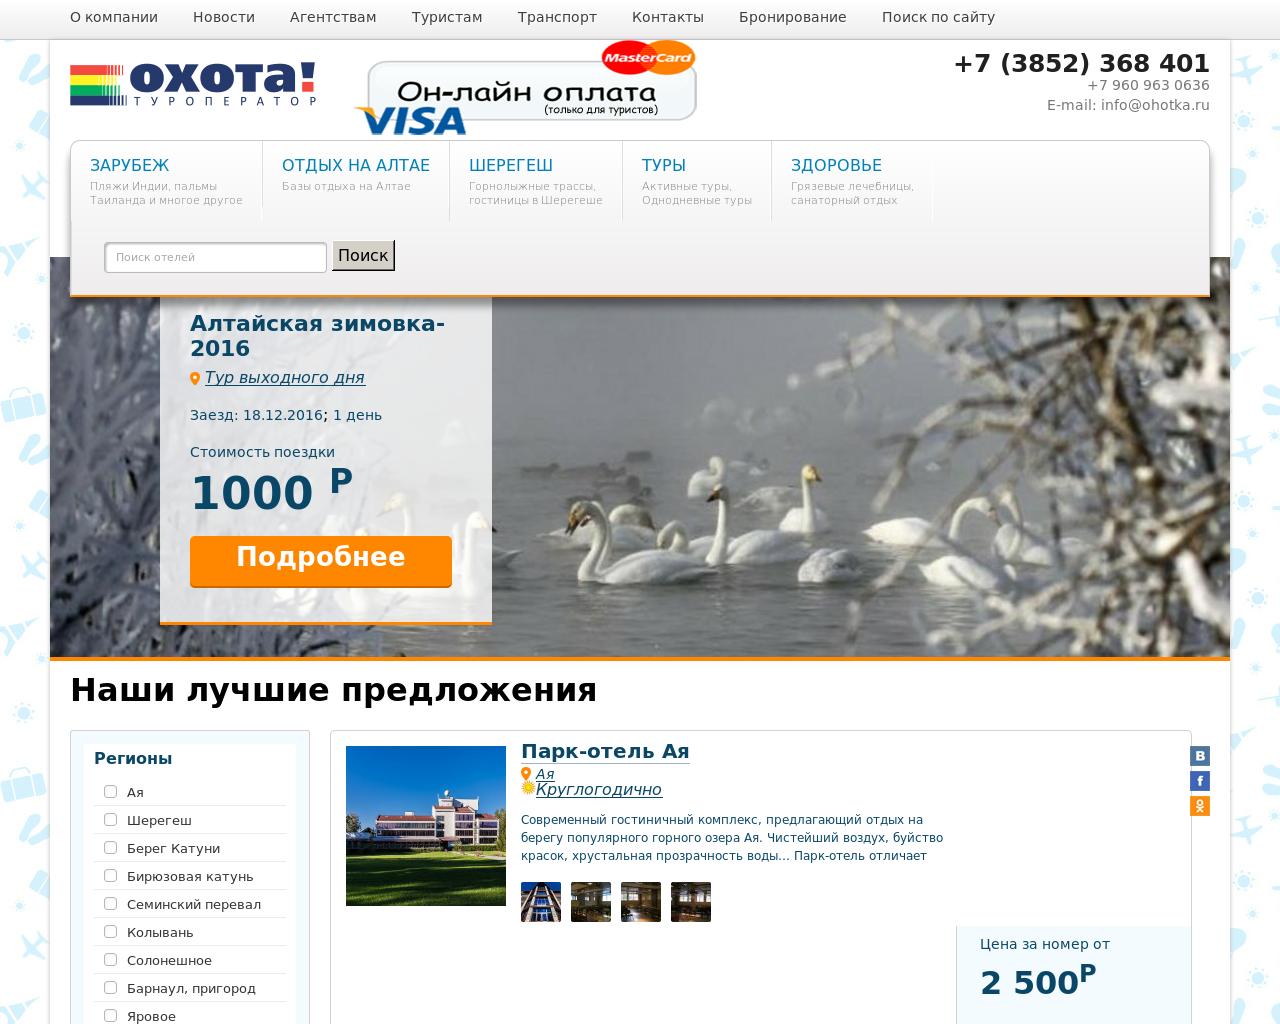 Изображение сайта ohotka.ru в разрешении 1280x1024